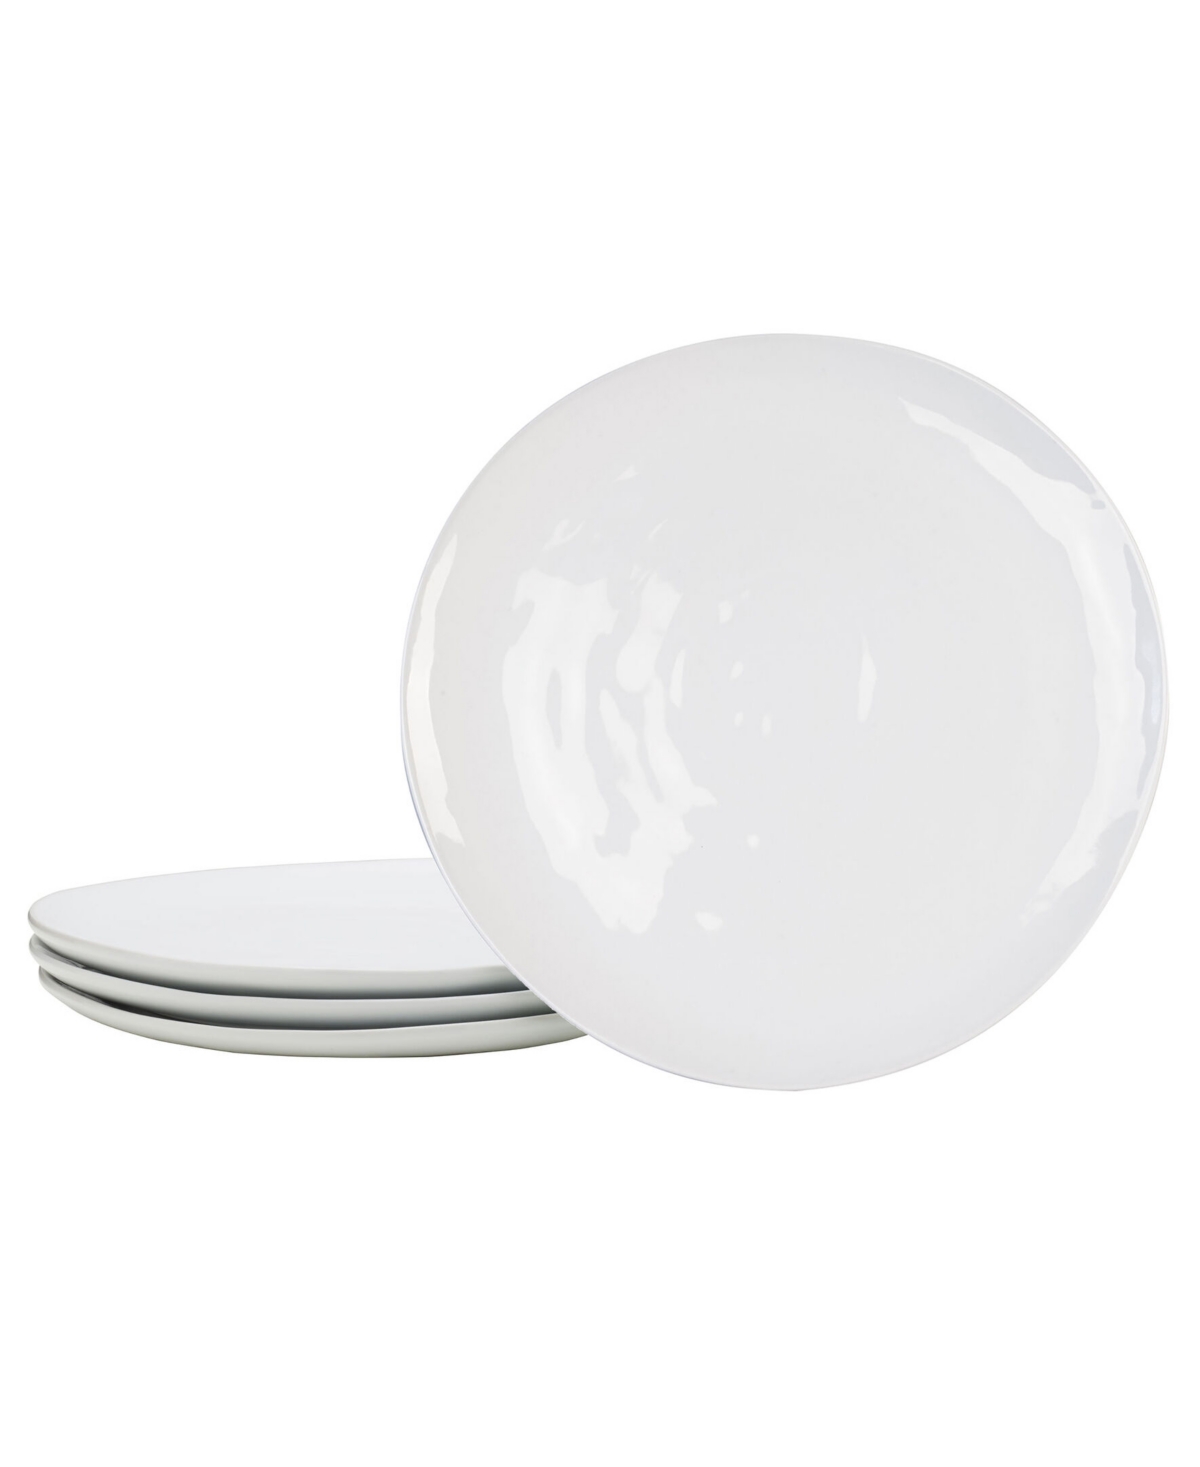 Everyday Whiteware Dinner Plate 4 Piece Set - White